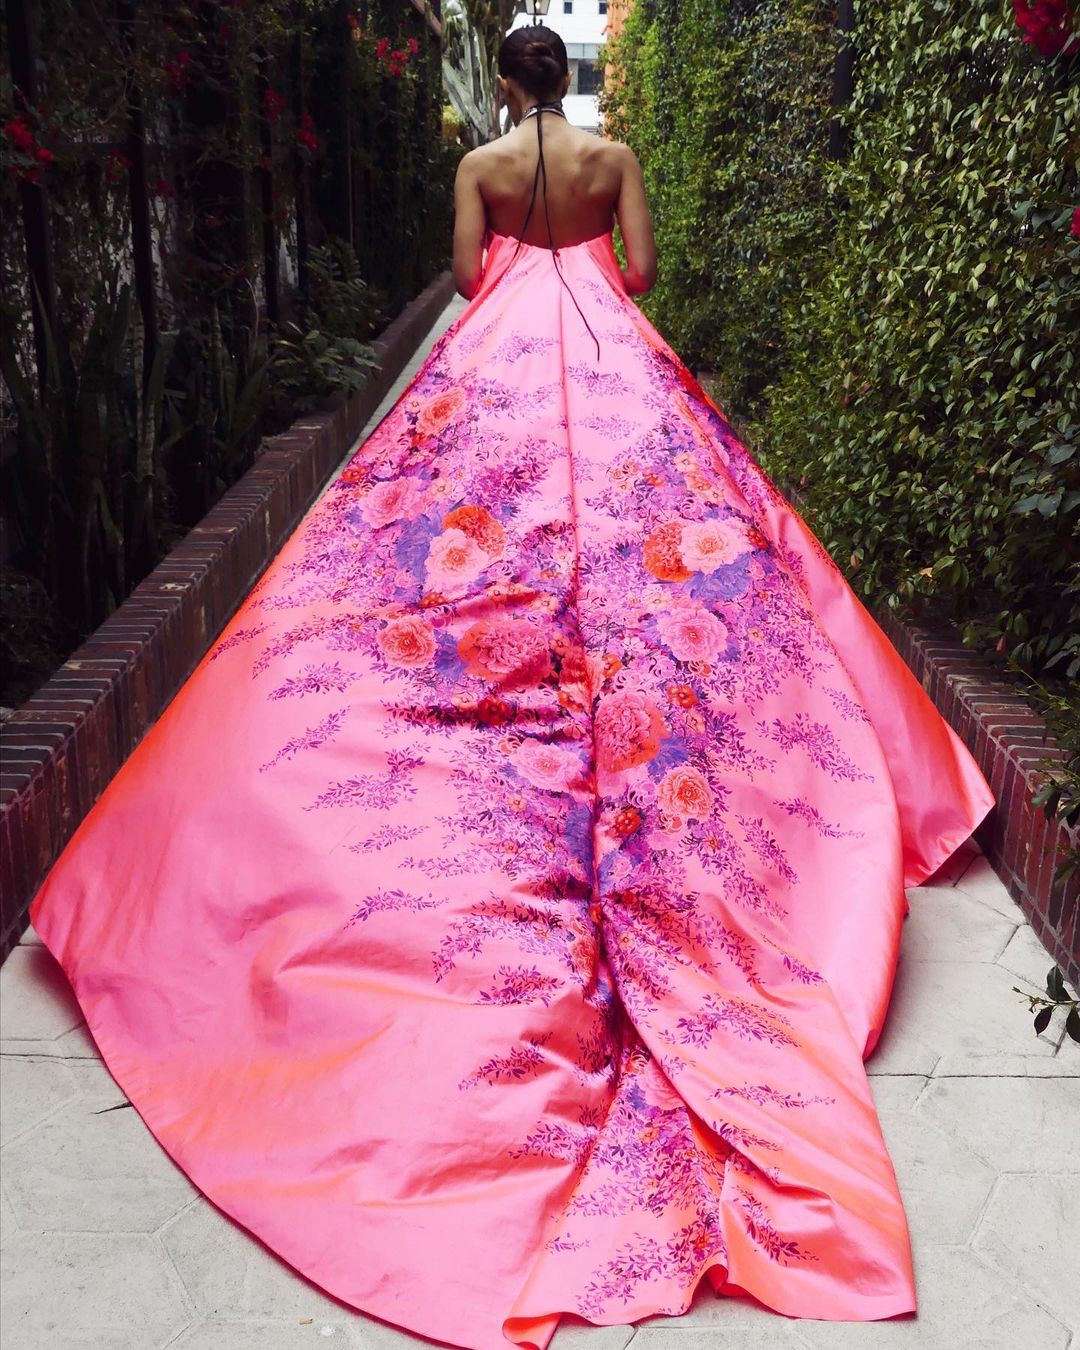 Debi Nova Flaunts Her Sexy Legs at the 63rd Annual Grammy Awards (15 Photos)